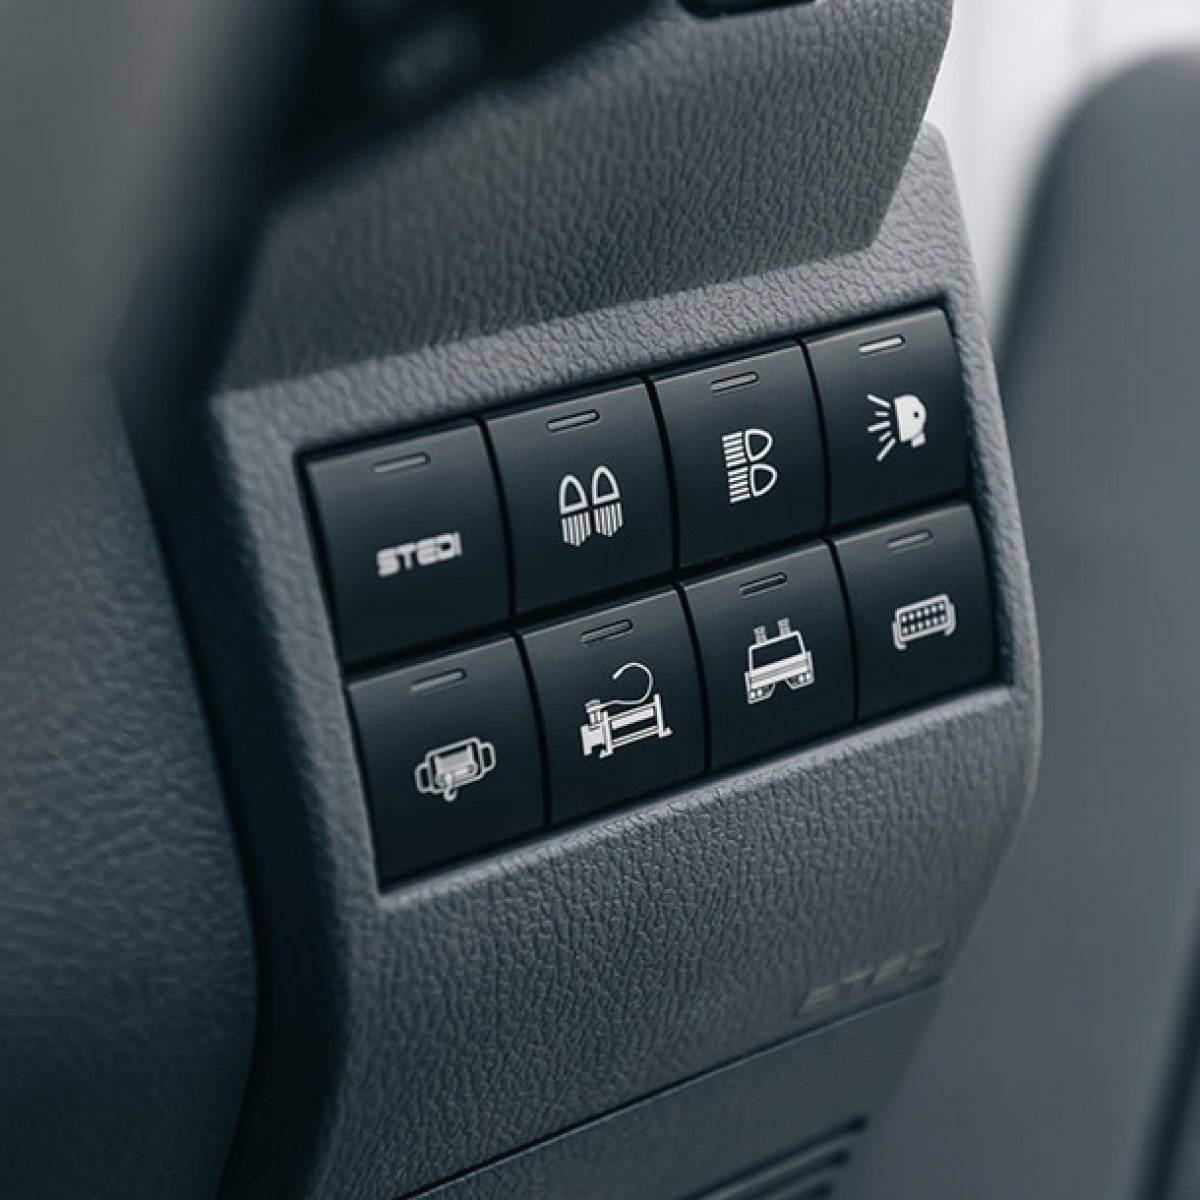 Stedi Switch - Work Lights - Square Type Push Switch to suit NEW Toyota Prado | Stedi